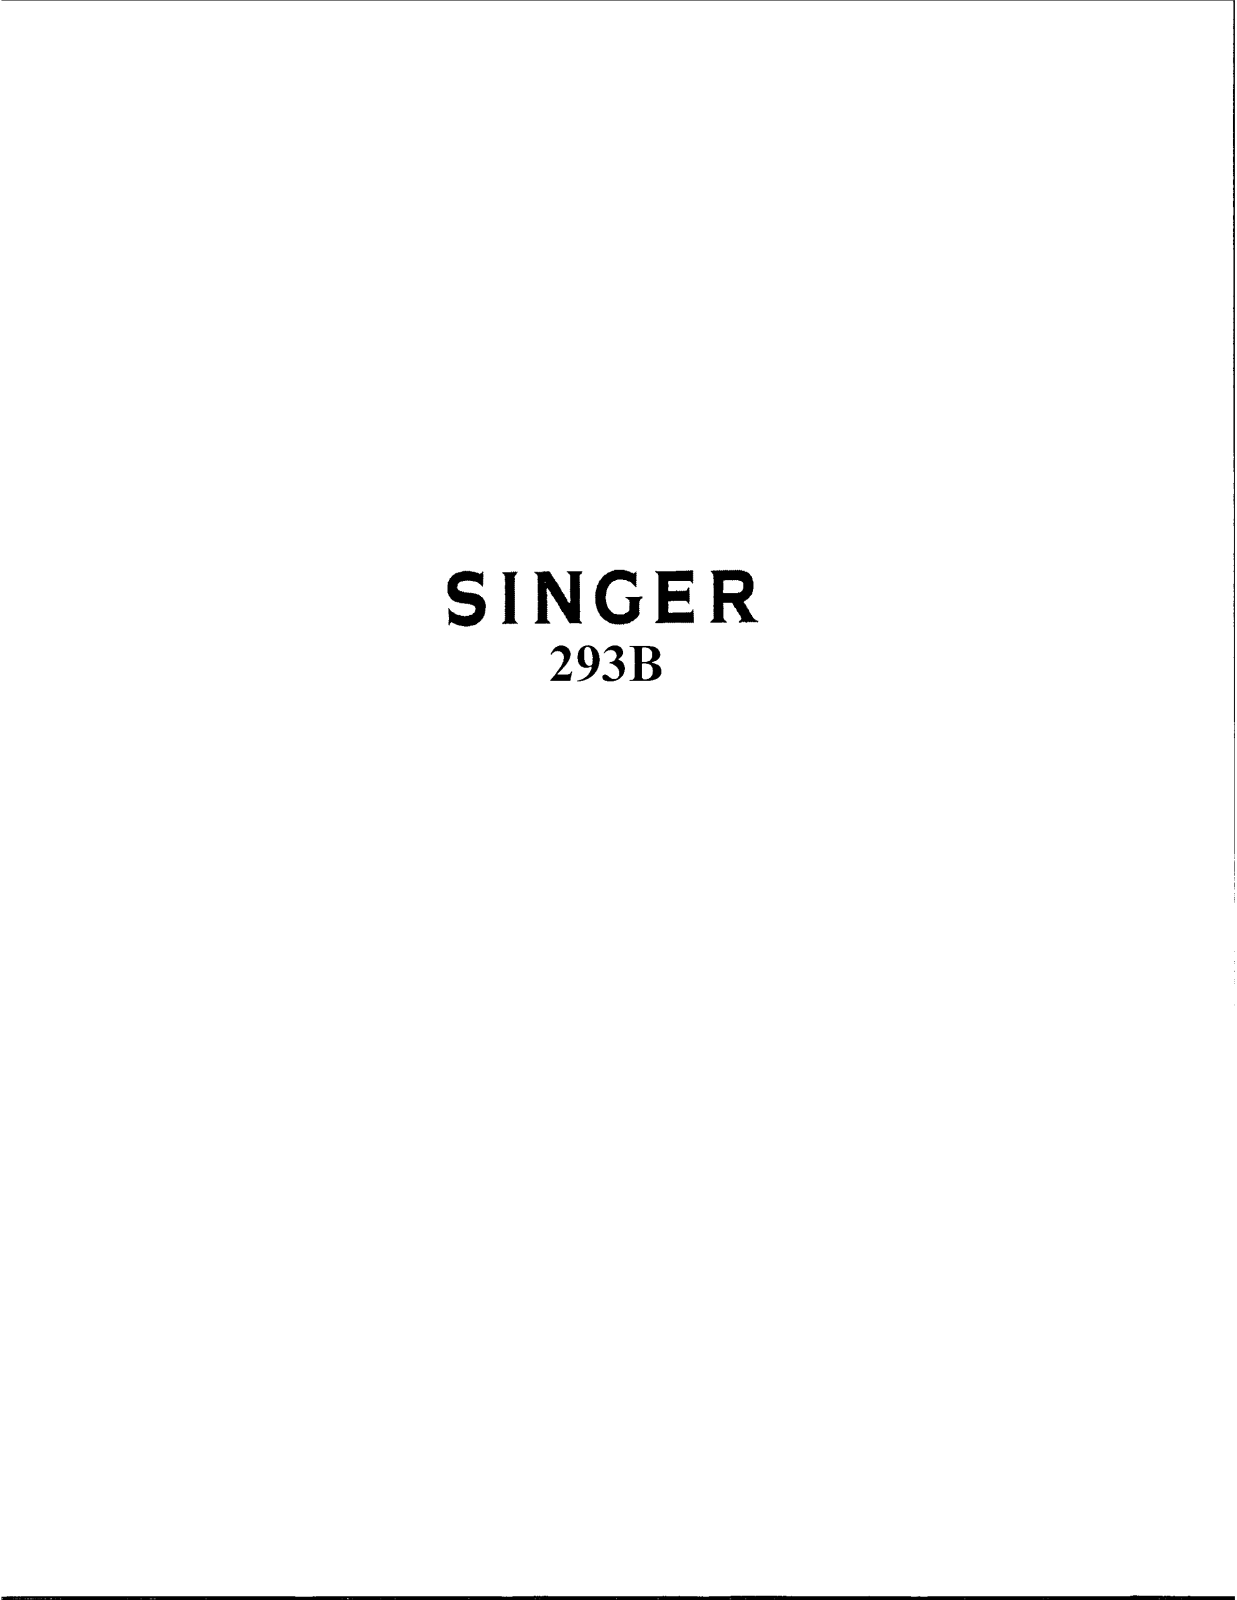 Singer 293B User Manual